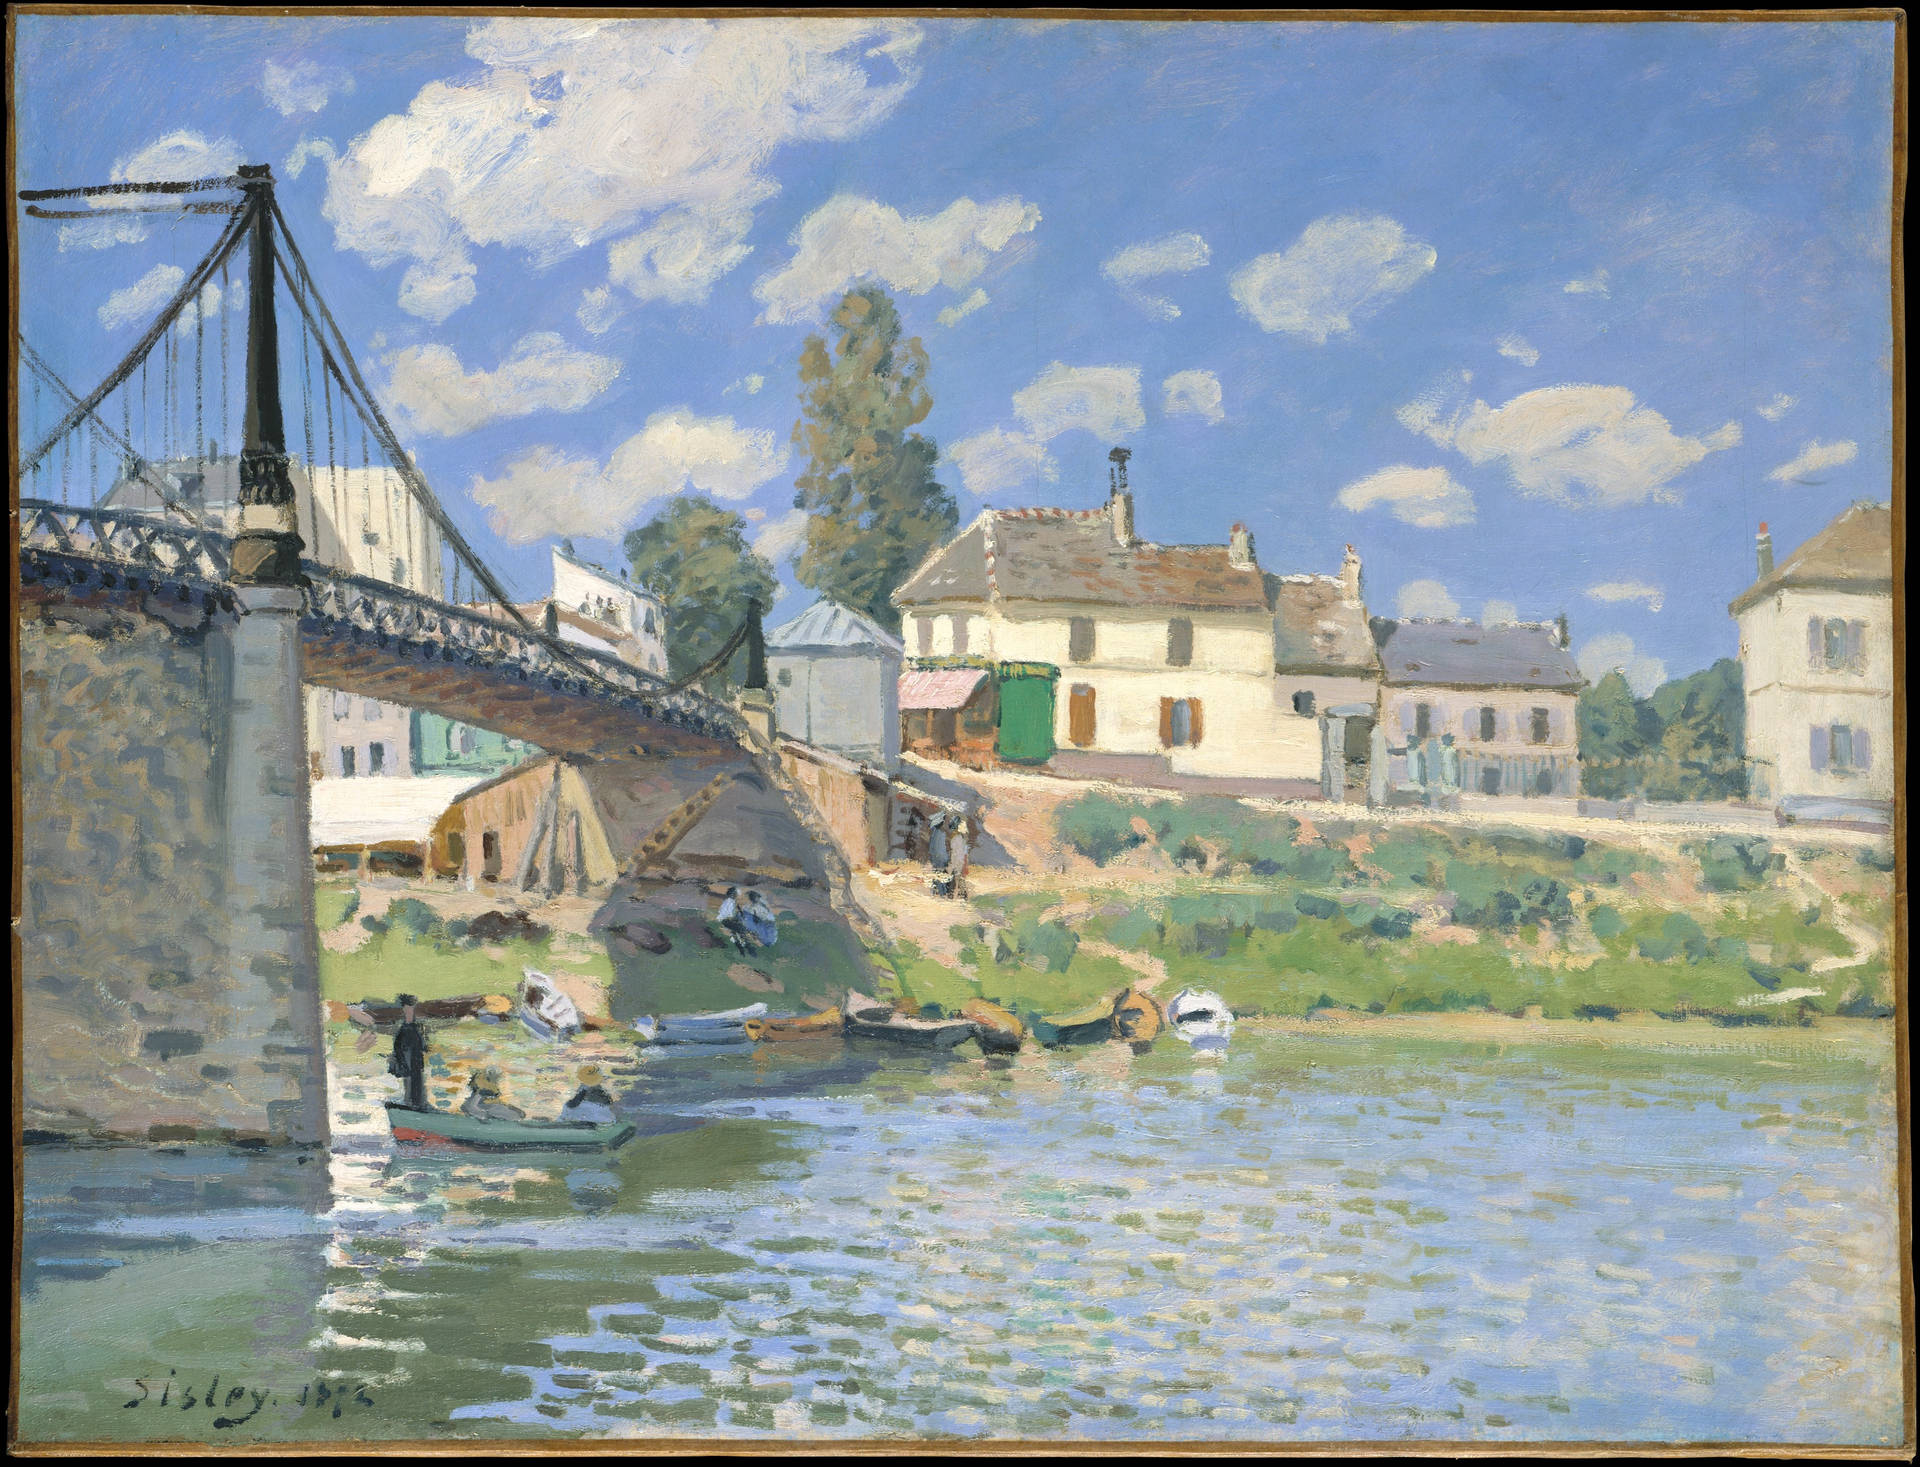 Caption: Graceful Serenity - The 'Bridge at Villeneuve' Impressionist Art Wallpaper